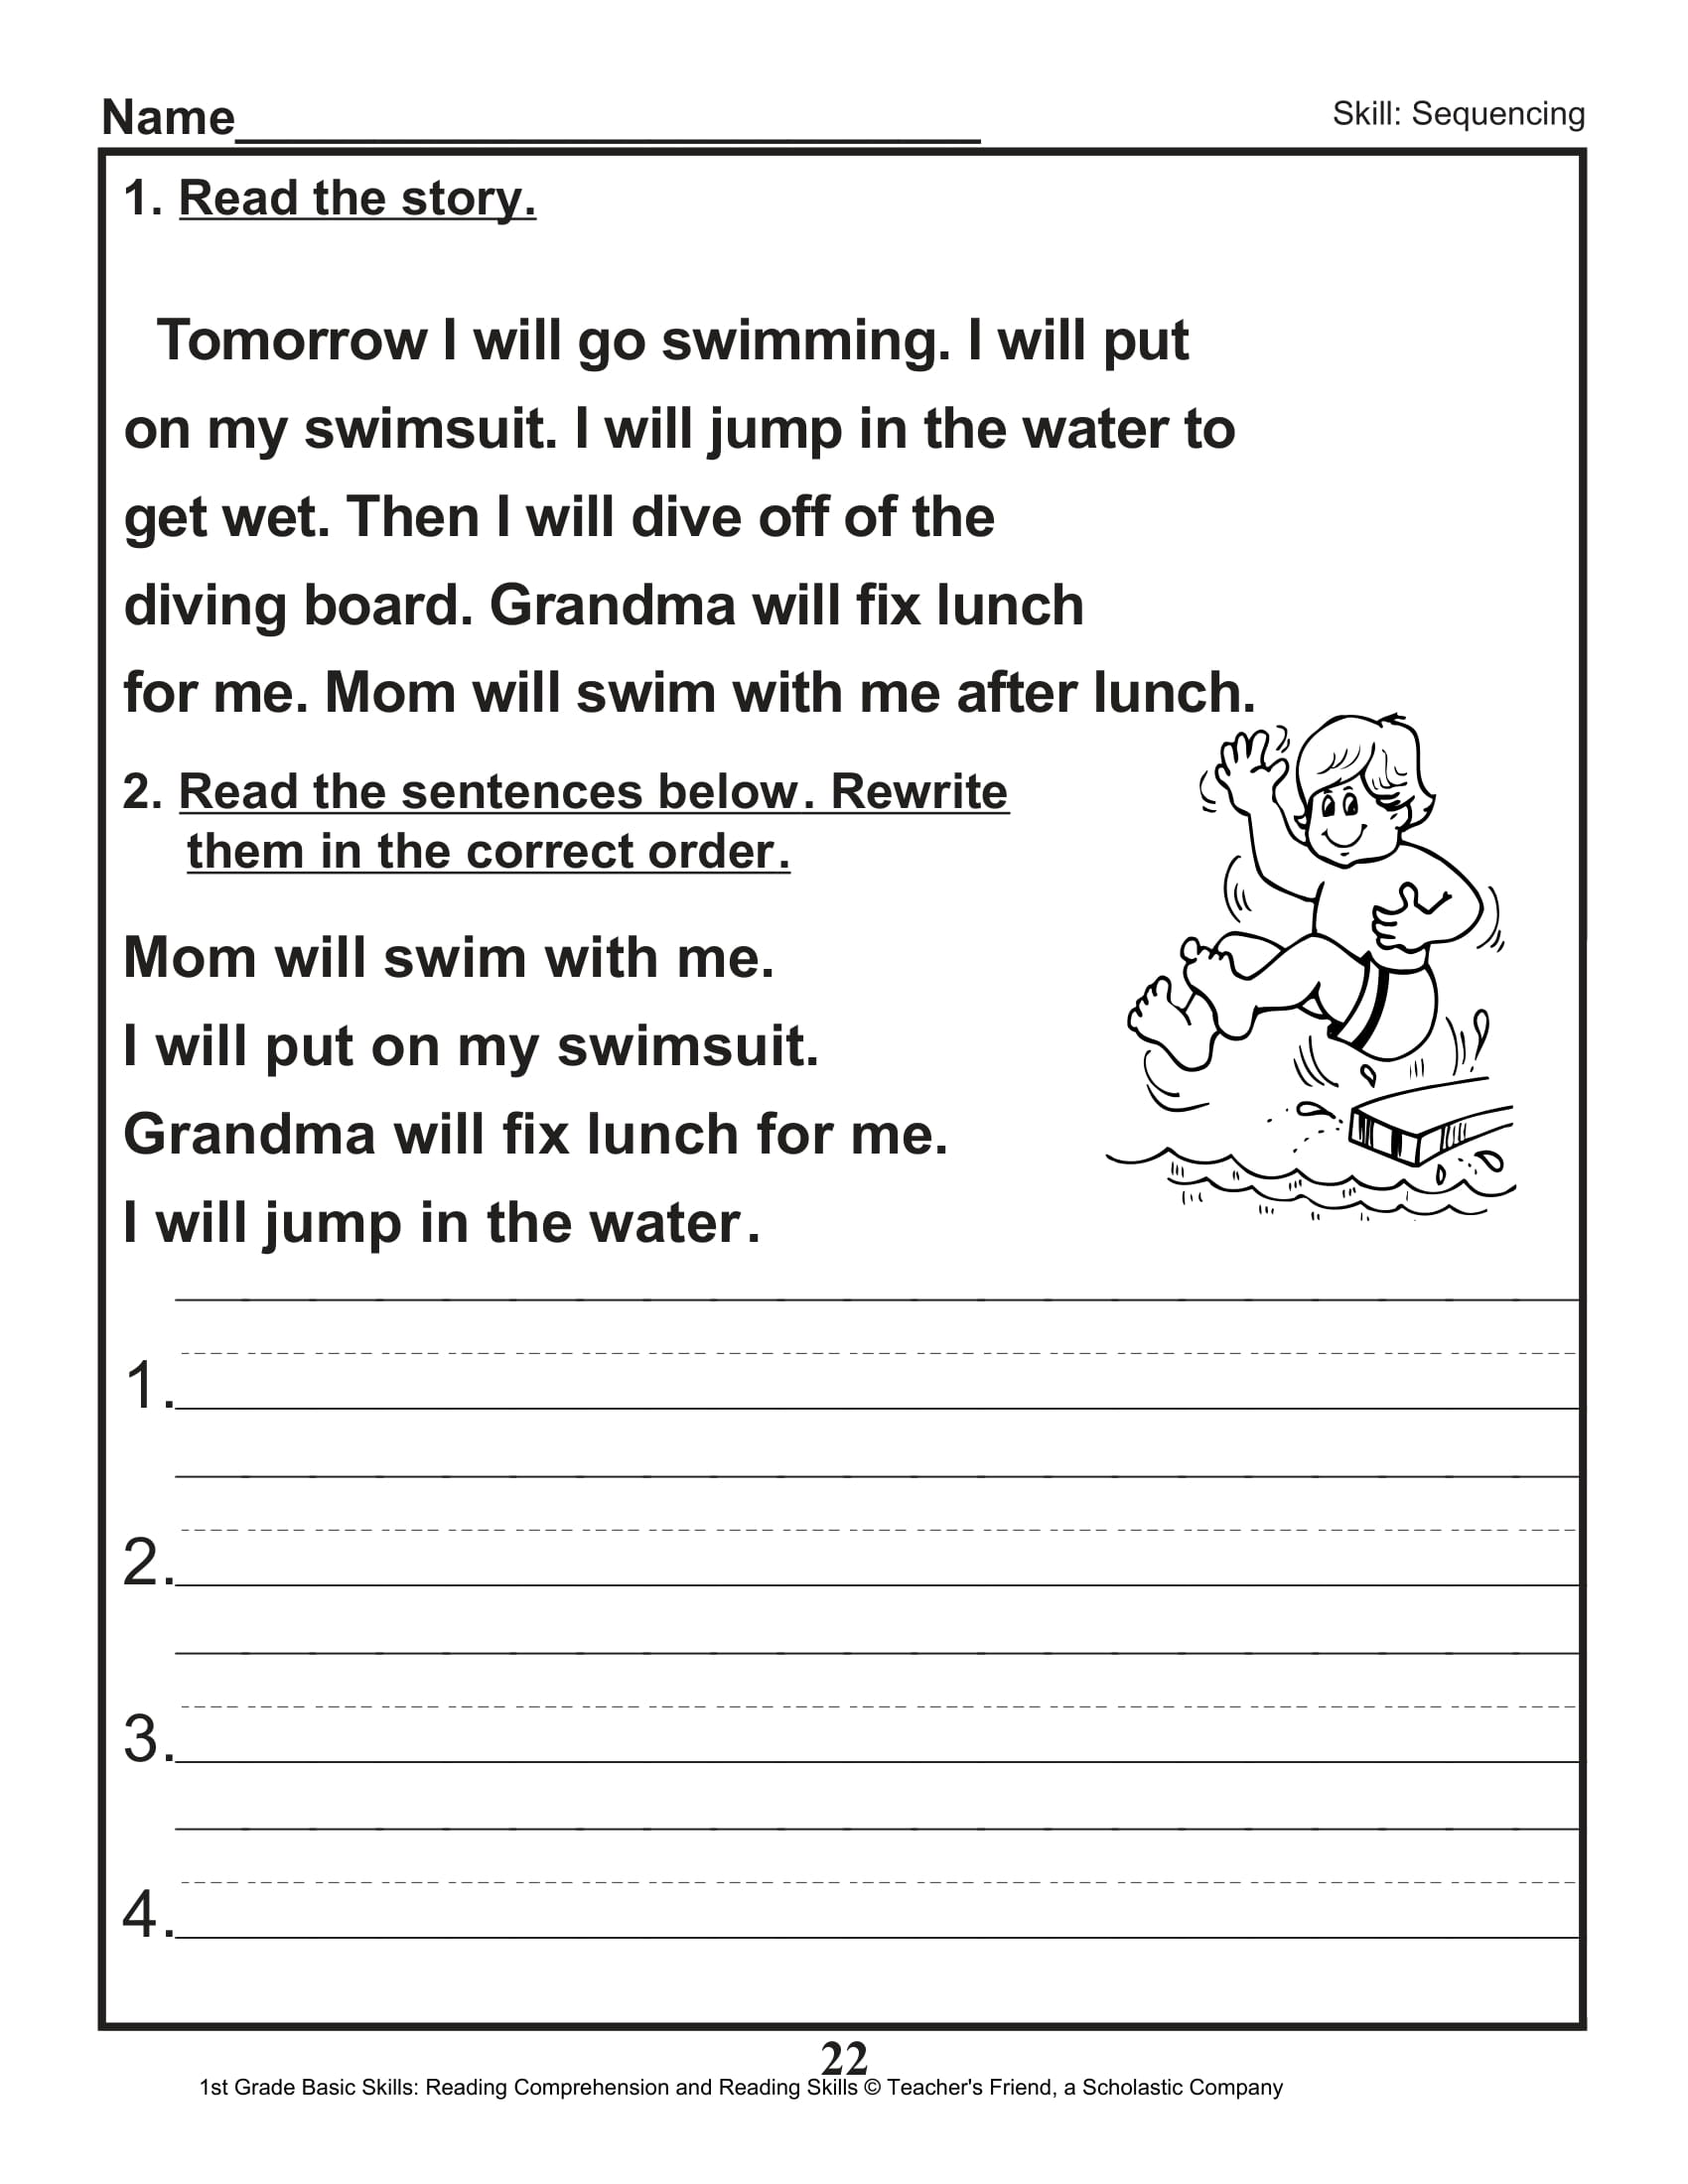 40 Scholastic 1st Grade Reading Comprehension Skills